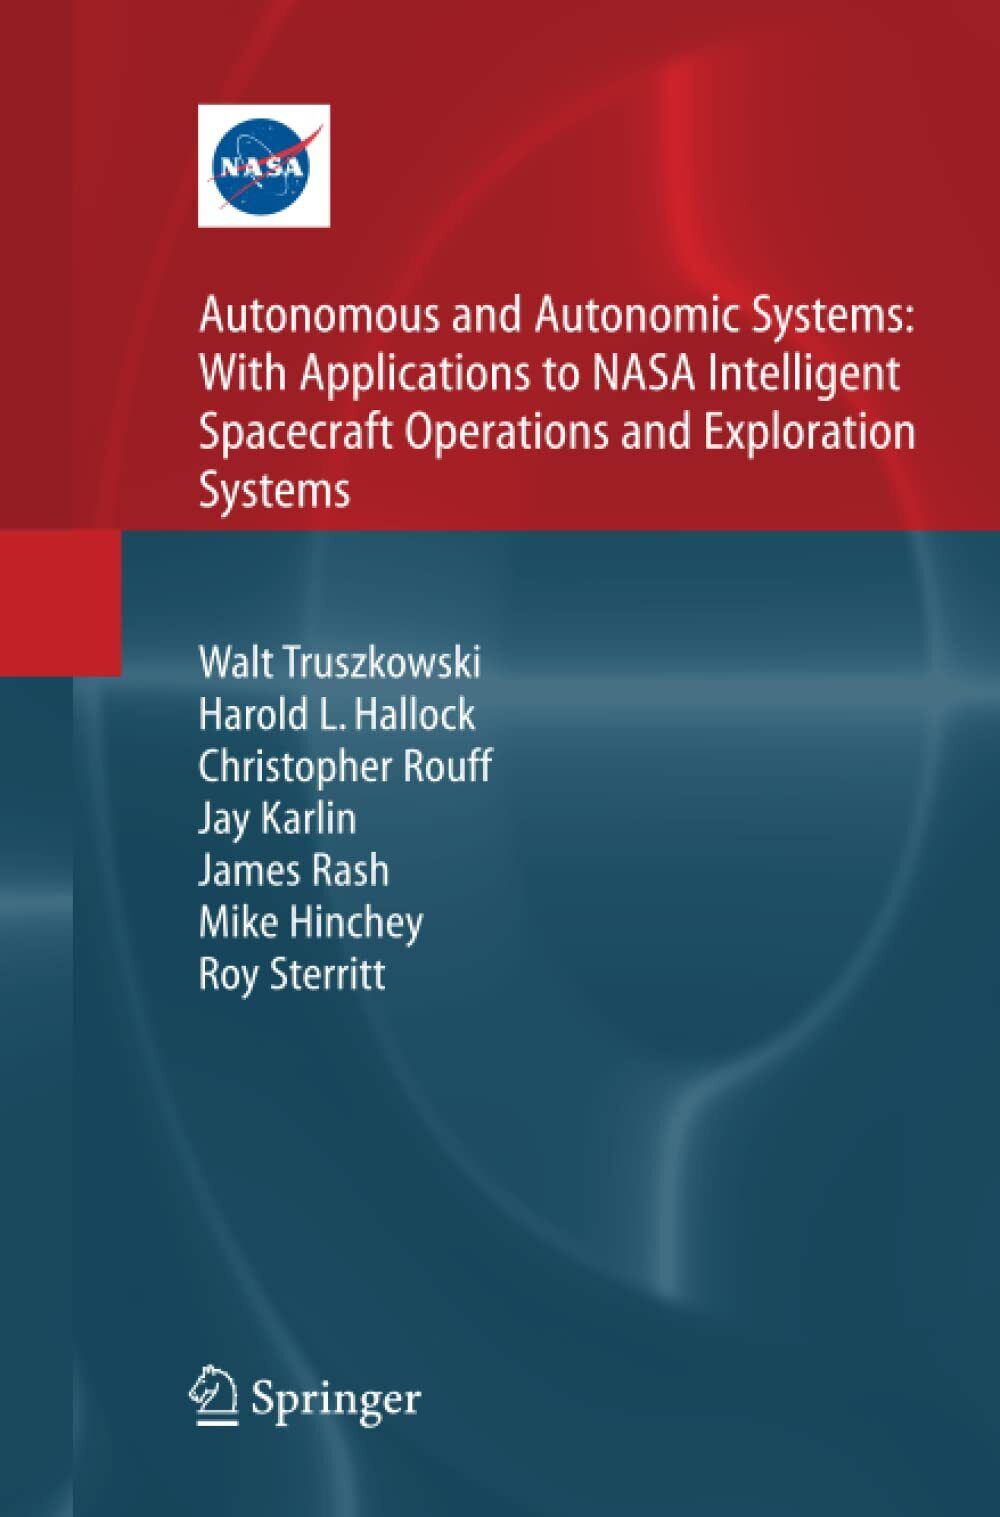 Autonomous and Autonomic Systems - Harold Hallock, Michael Hinchey-Springer,2012